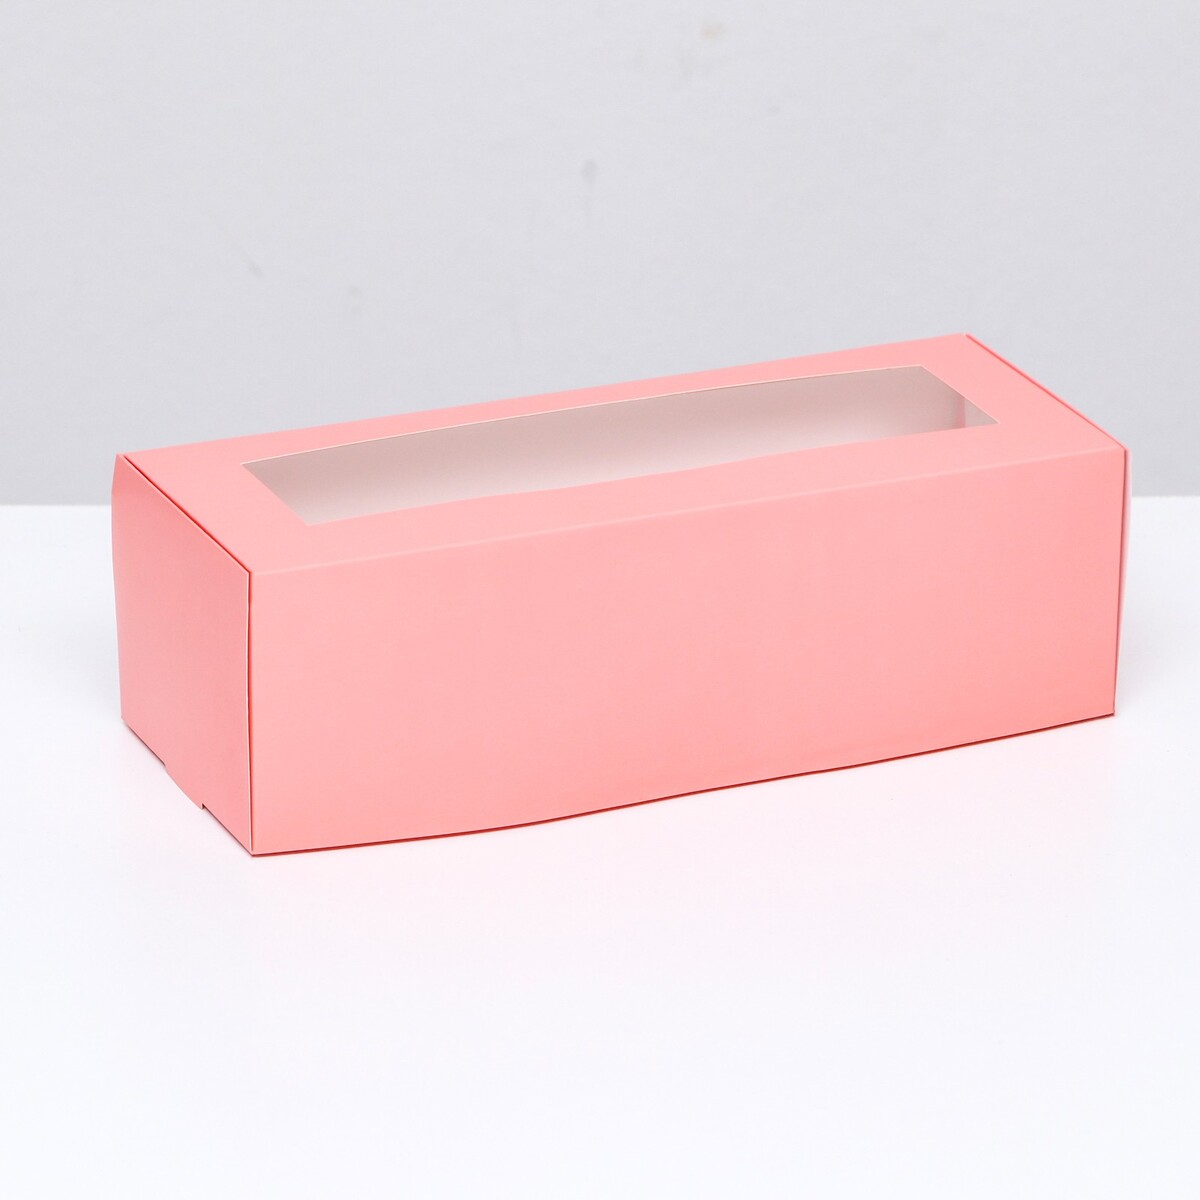 Коробка складная с окном под рулет, розовая, 26 х 10 х 8 см коробка под рулет белая 30 х 12 х 12 см